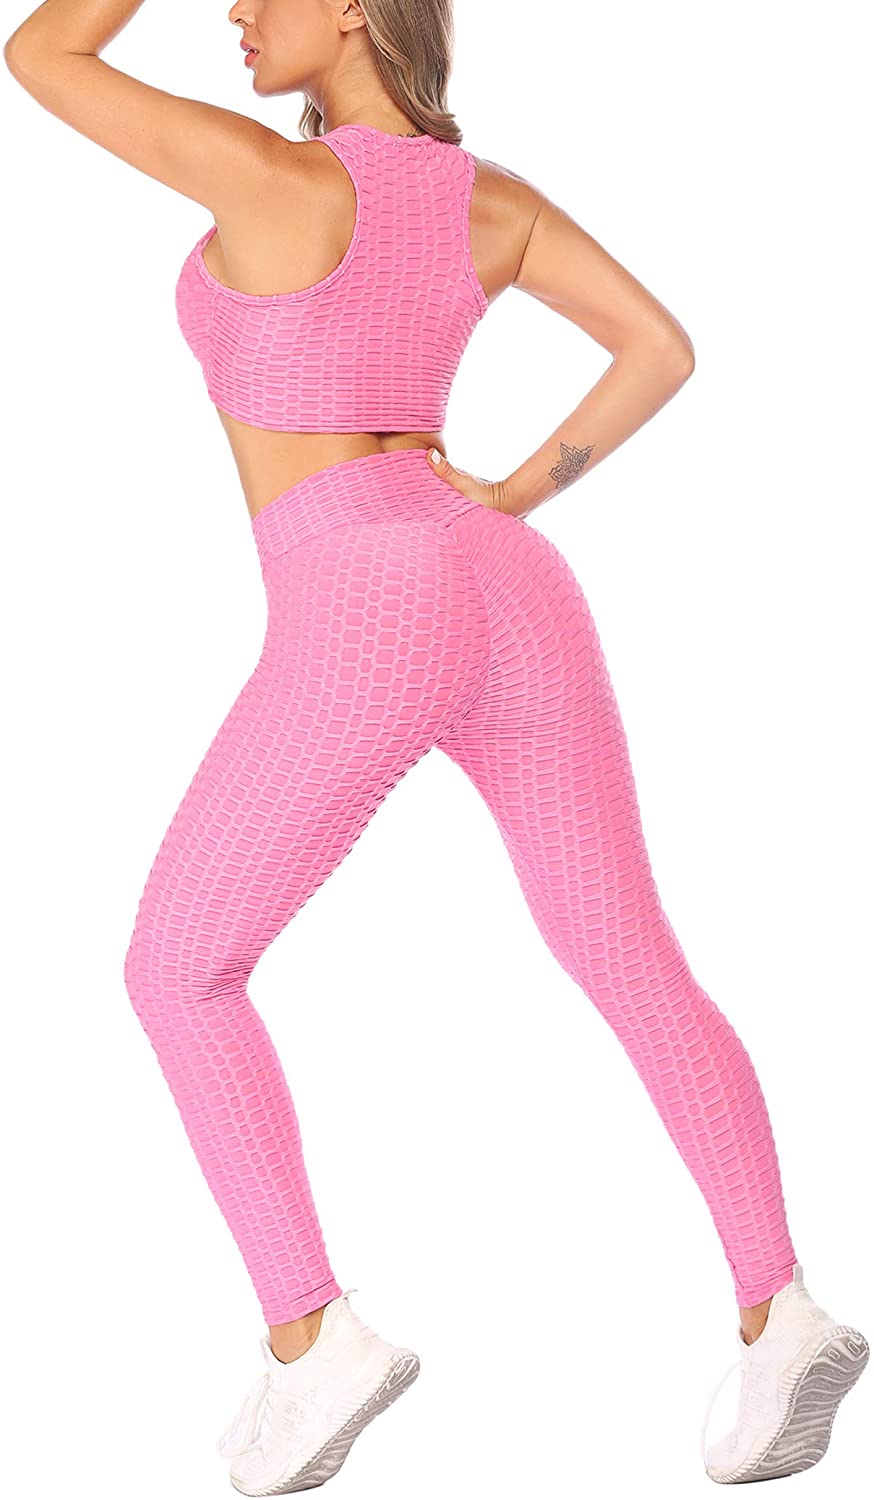 COOrun Workout Sets for Women 2 Piece Yoga Outfit Athletic Set Gym Clothes